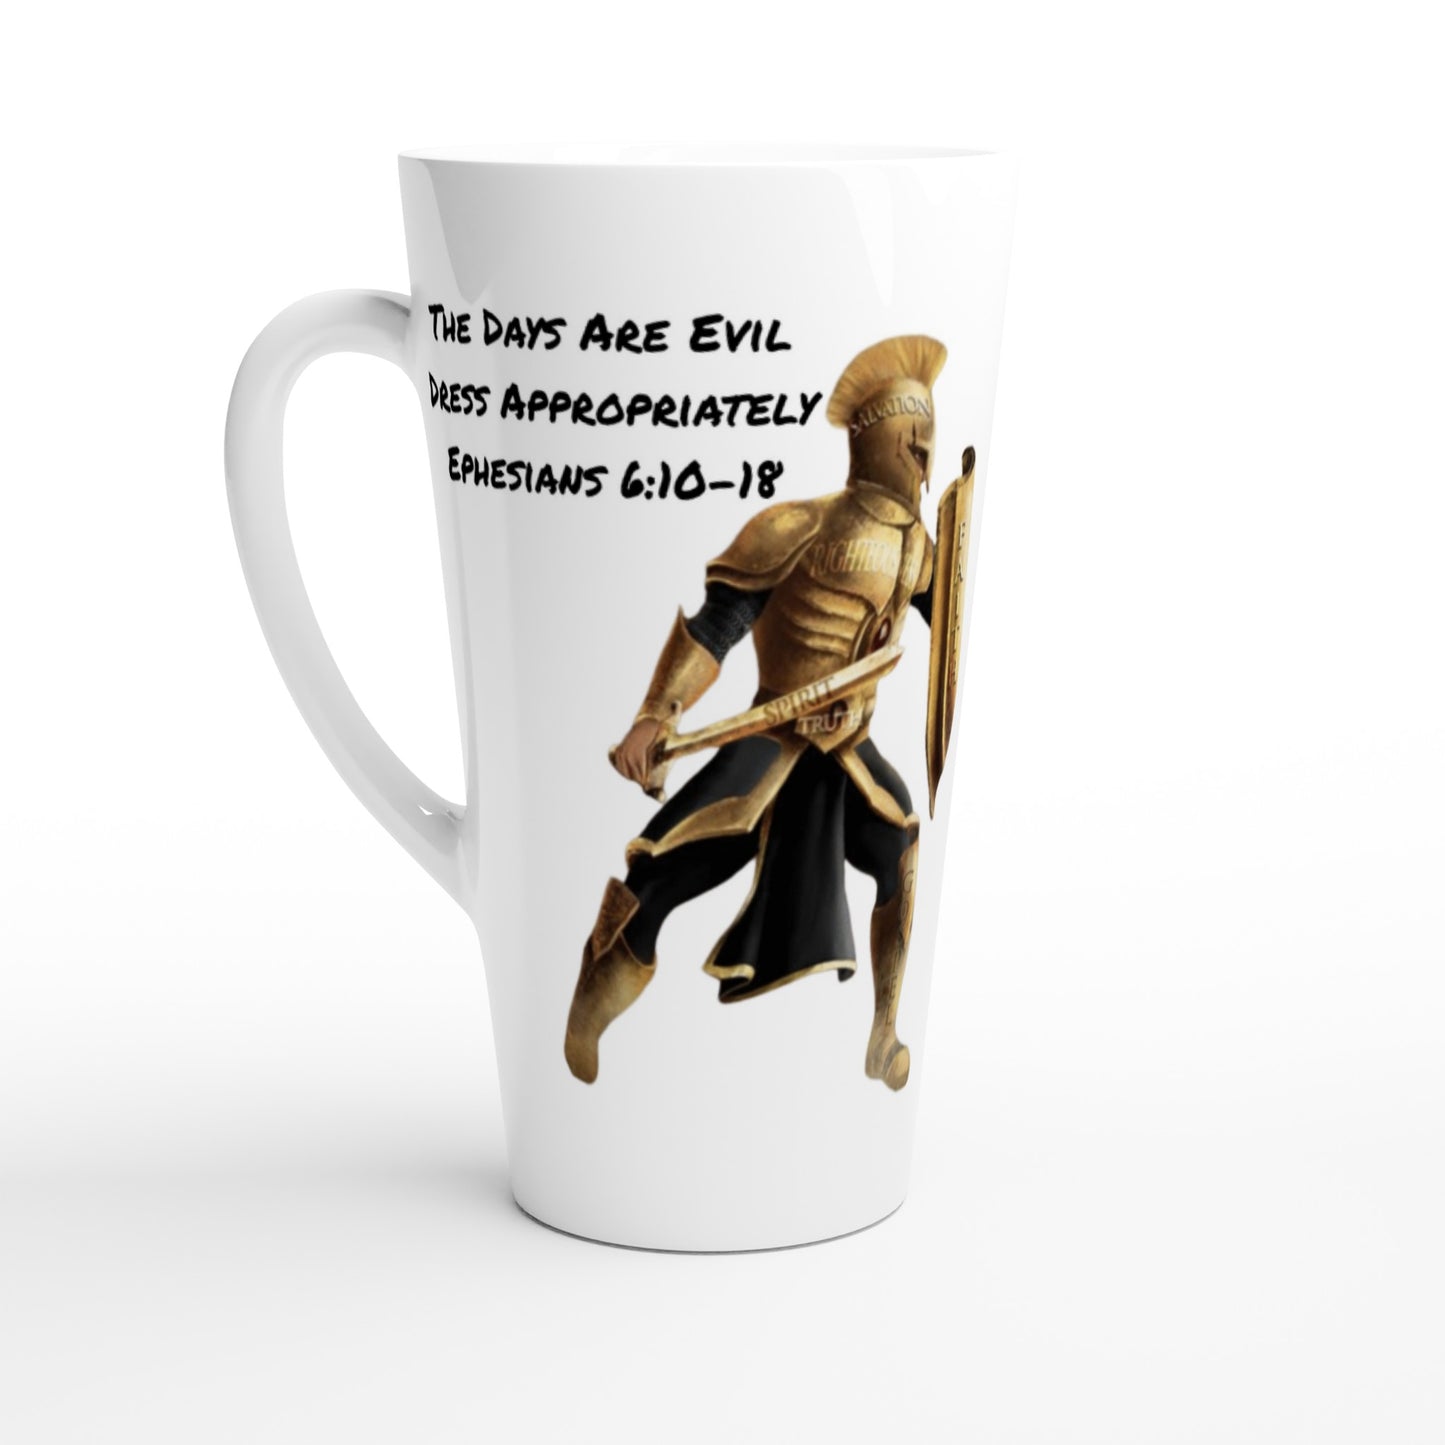 The Days Are Evil.  Dress Appropriately. Ephesians 6:10-18 Christian Armour Mug | Christian Faith Mug | Inspirational Coffee Cup